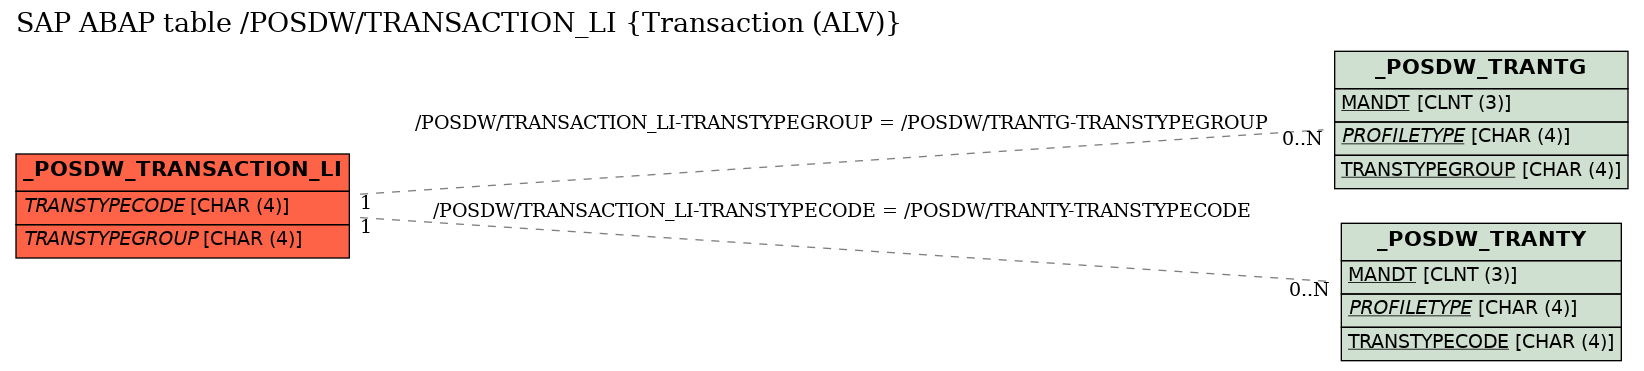 E-R Diagram for table /POSDW/TRANSACTION_LI (Transaction (ALV))